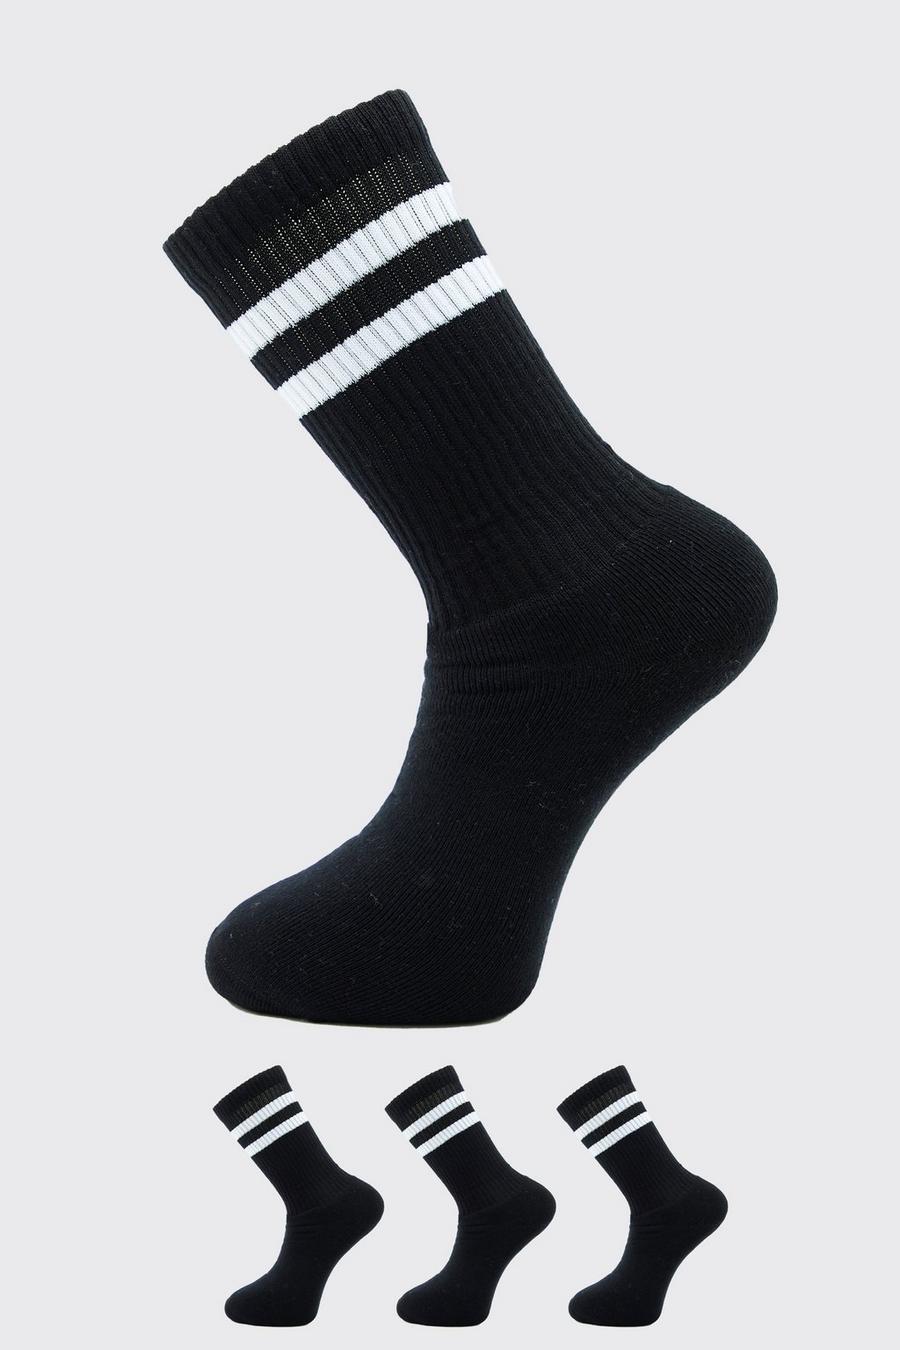 3er-Pack gestreifte Sport-Socken, Black schwarz